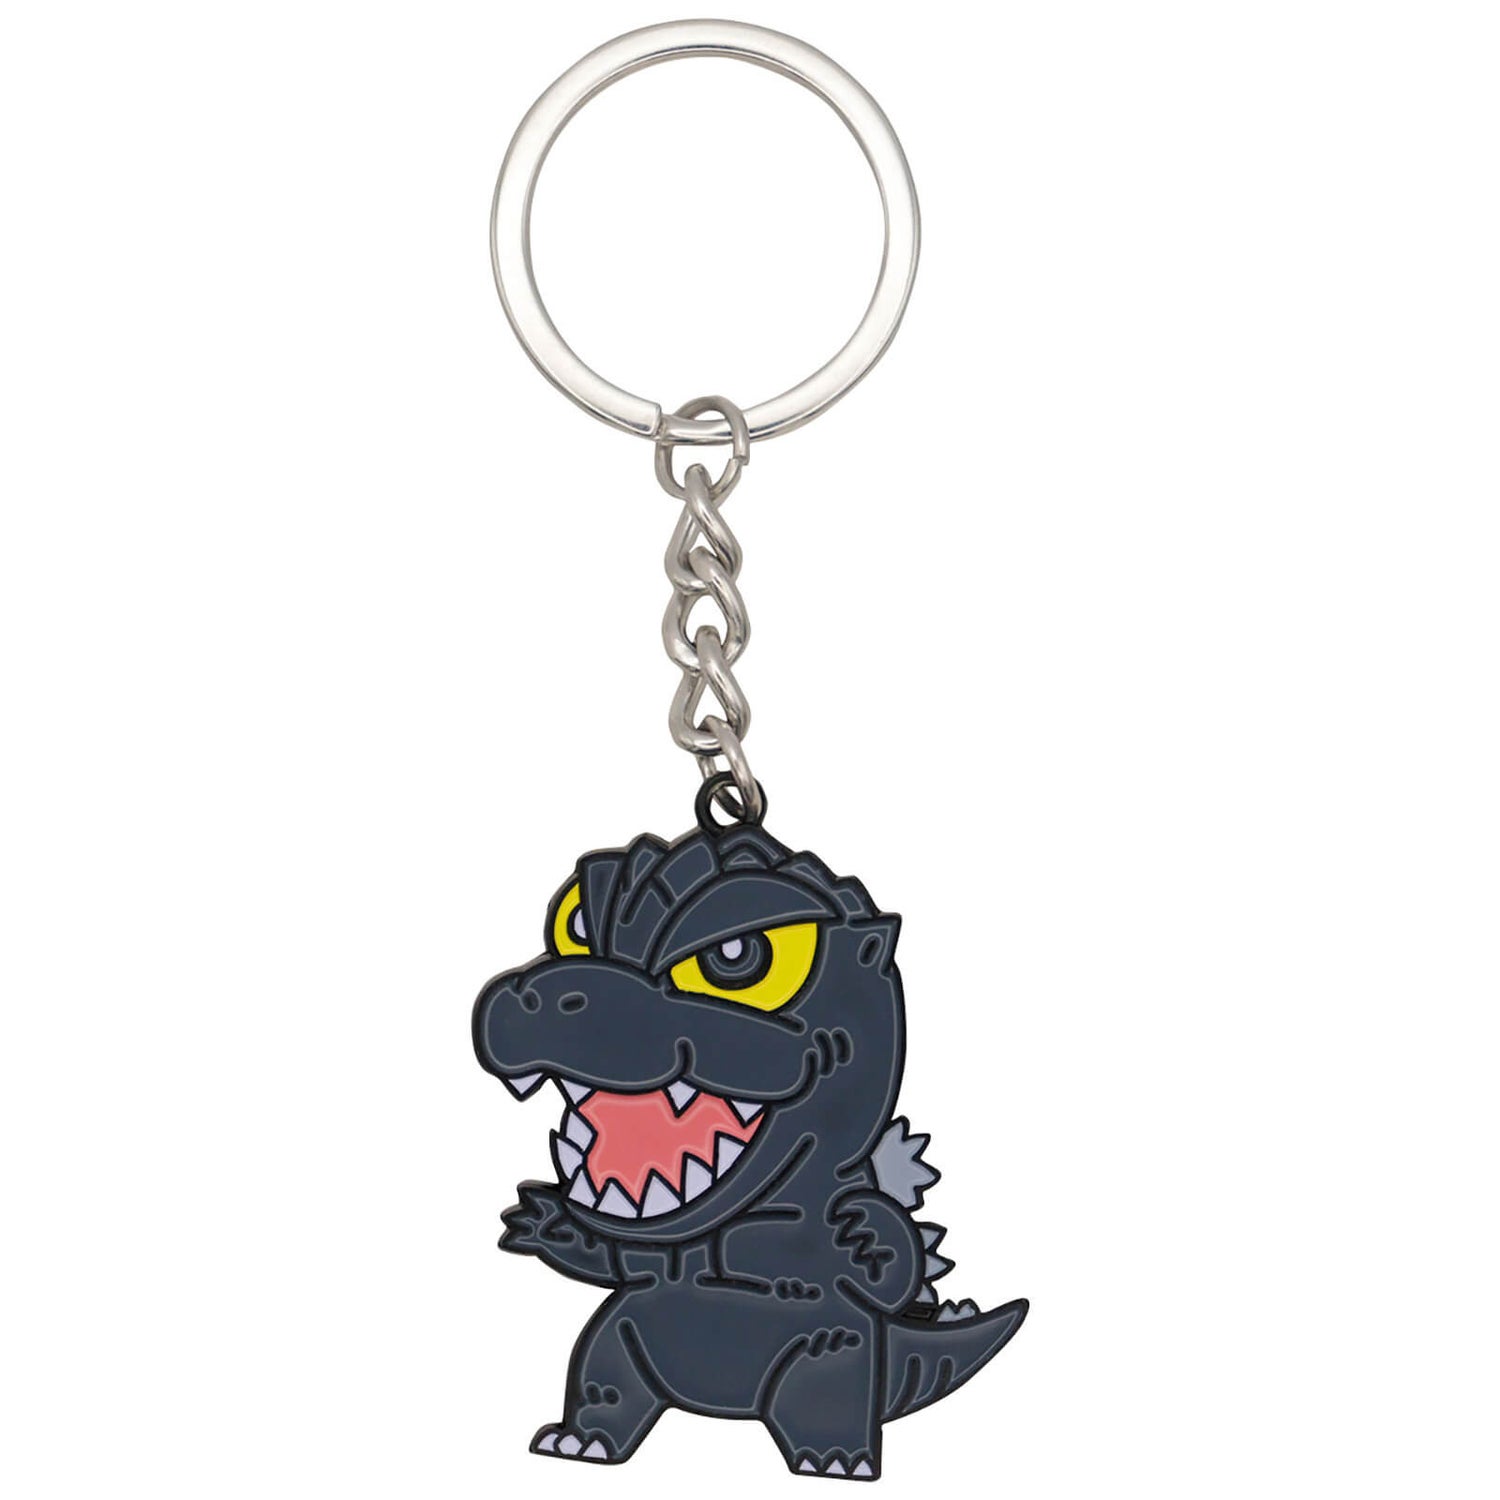 Godzilla Limited Edition Key Ring by Fanattik